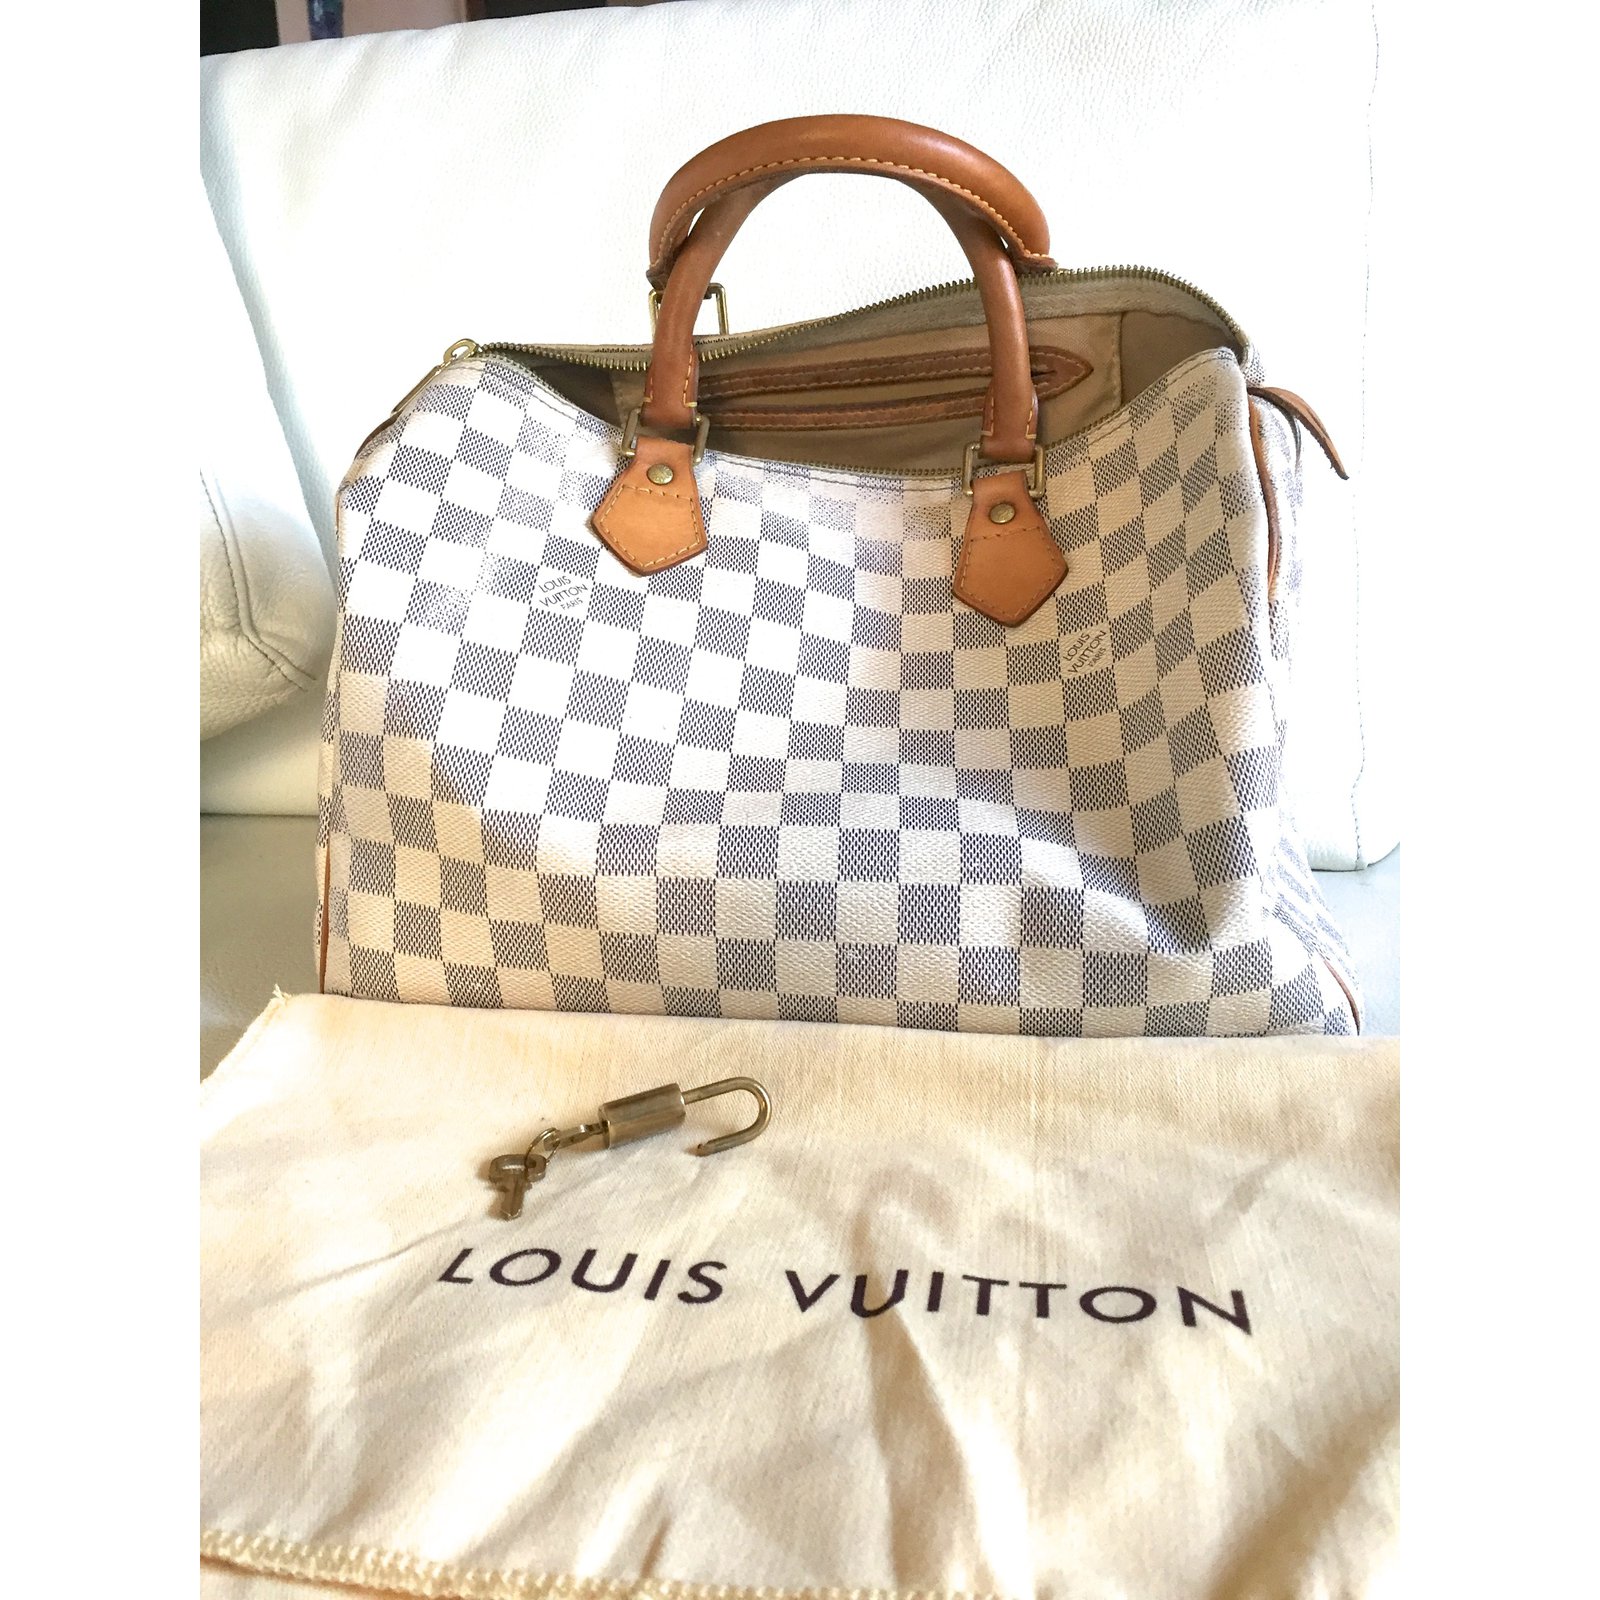 LOUIS VUITTON Damier Azur Speedy 30 Handbag - 30% Off